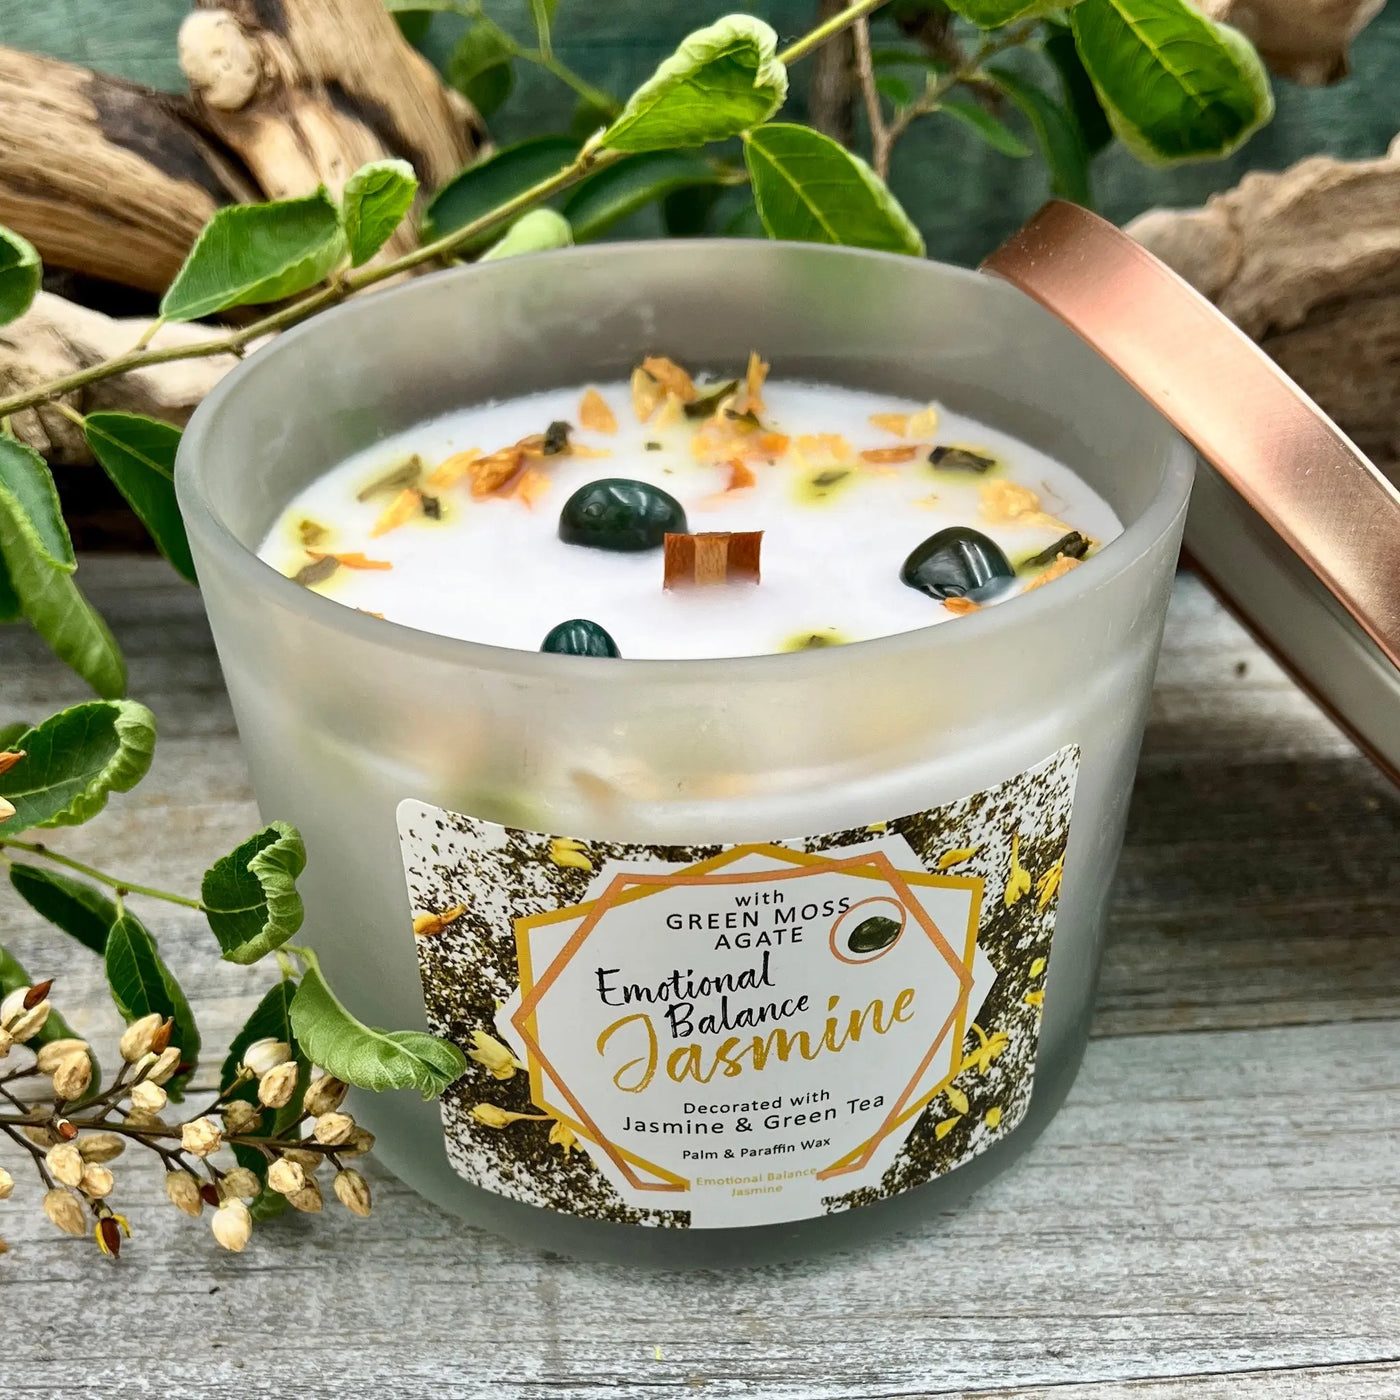 Emotional Balance Jasmine Candle with Moss Agate